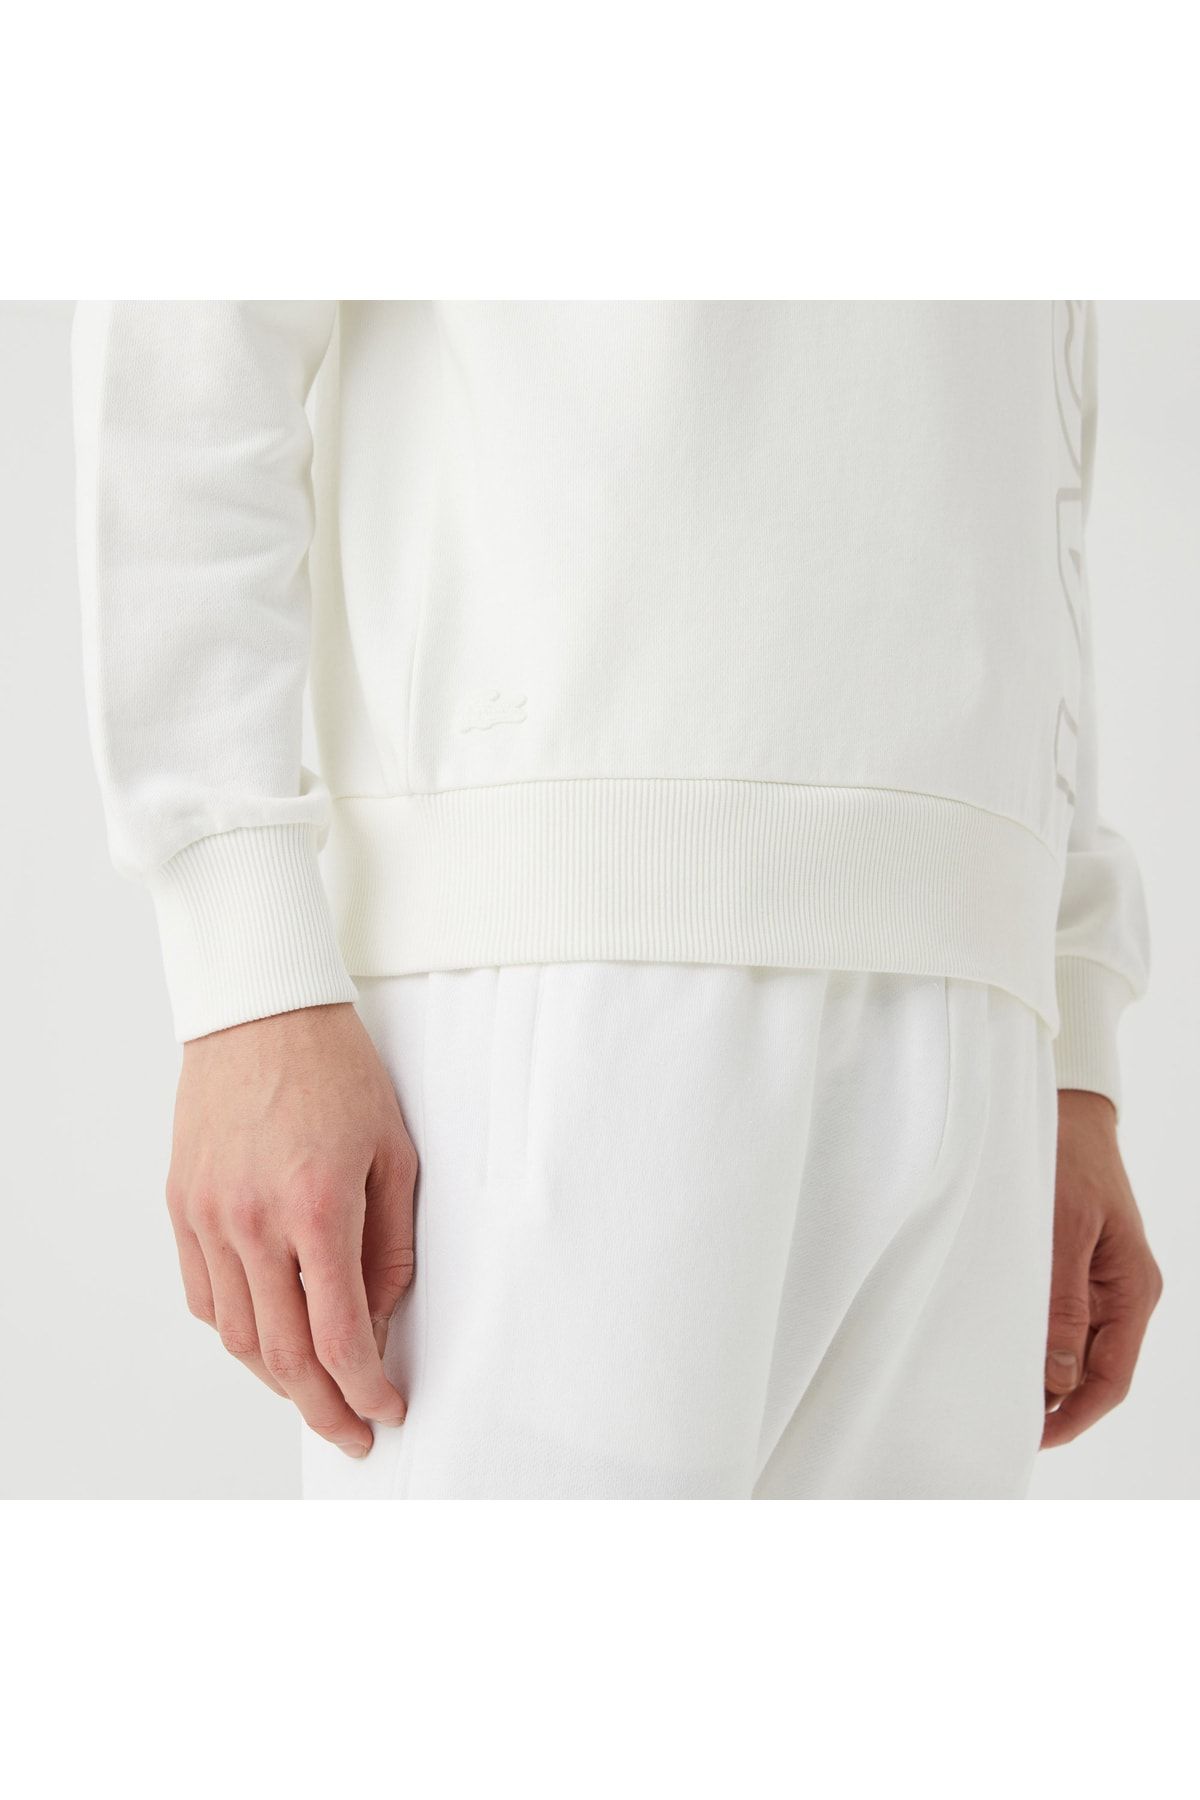 Lacoste یونسکس با لباس مناسب پیراهن سفید